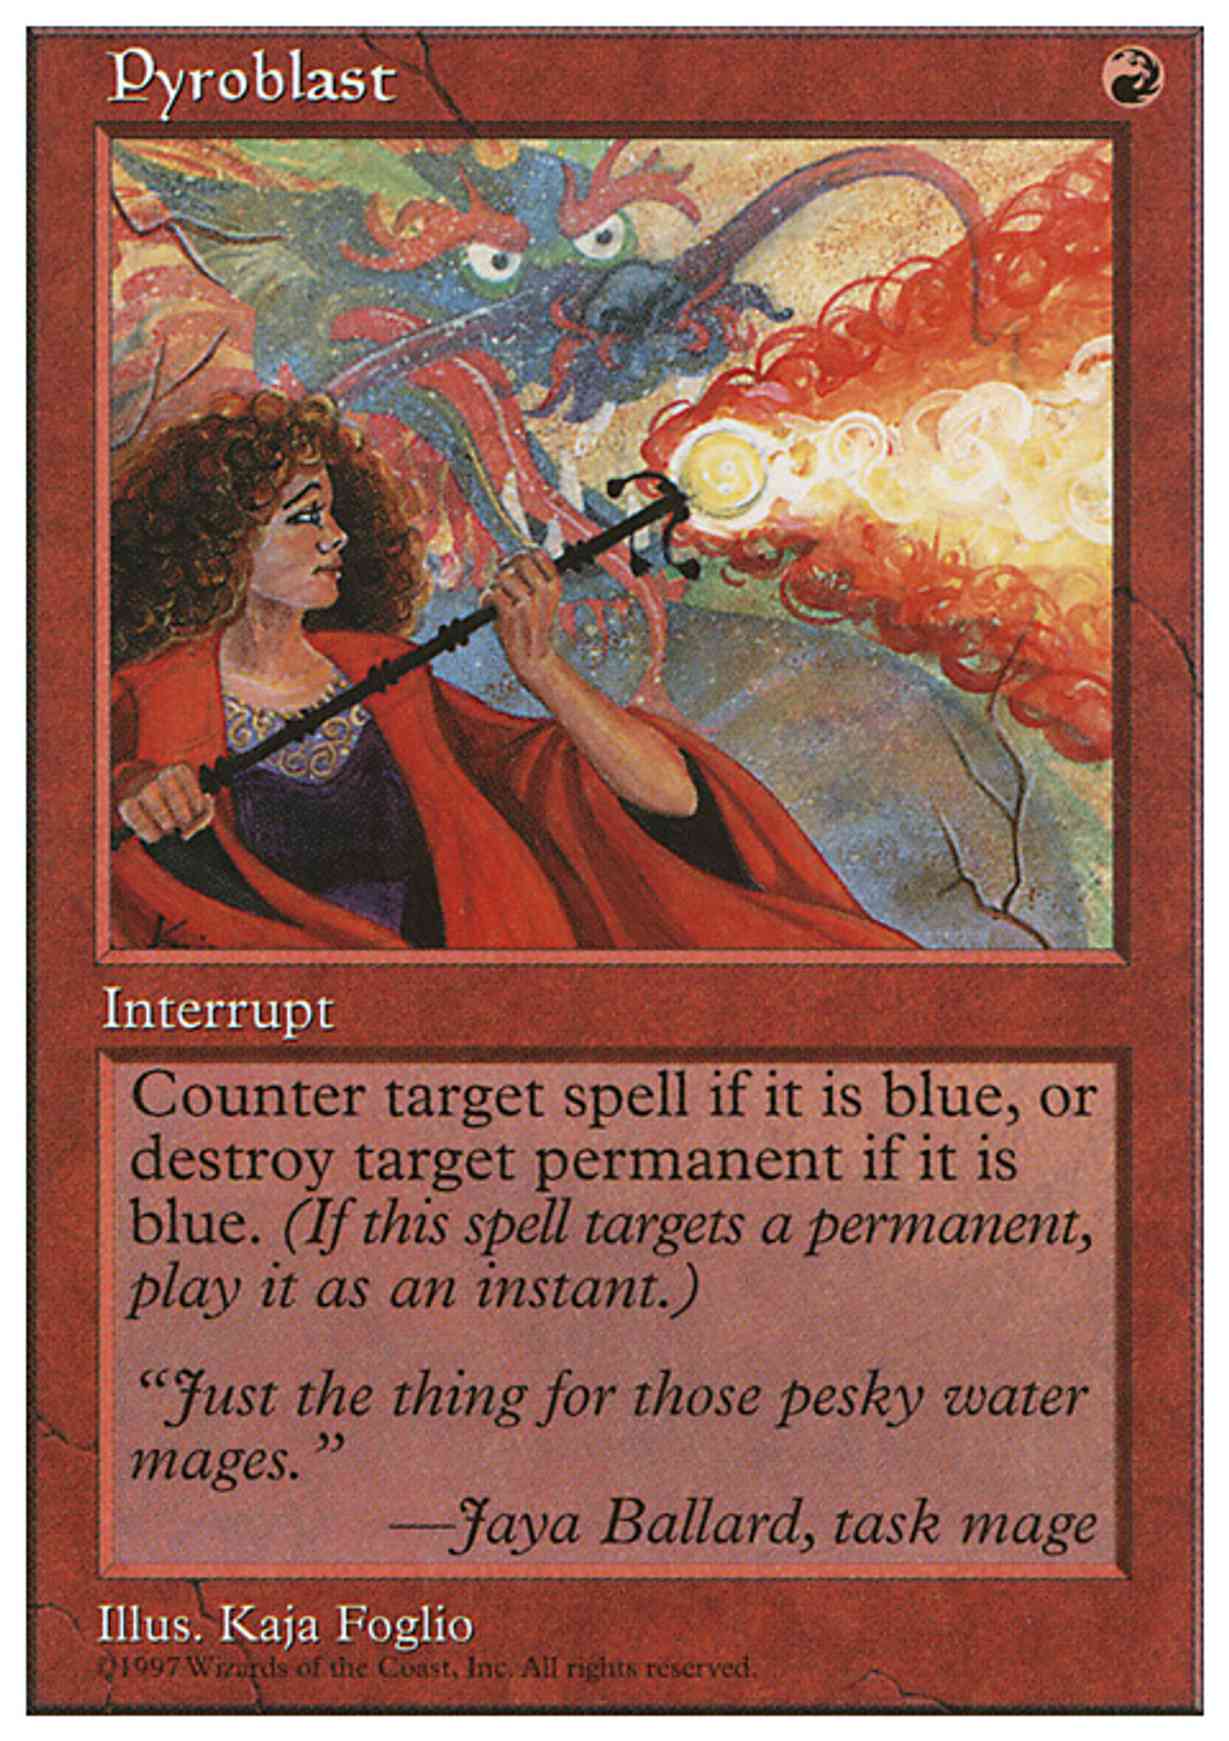 Pyroblast magic card front